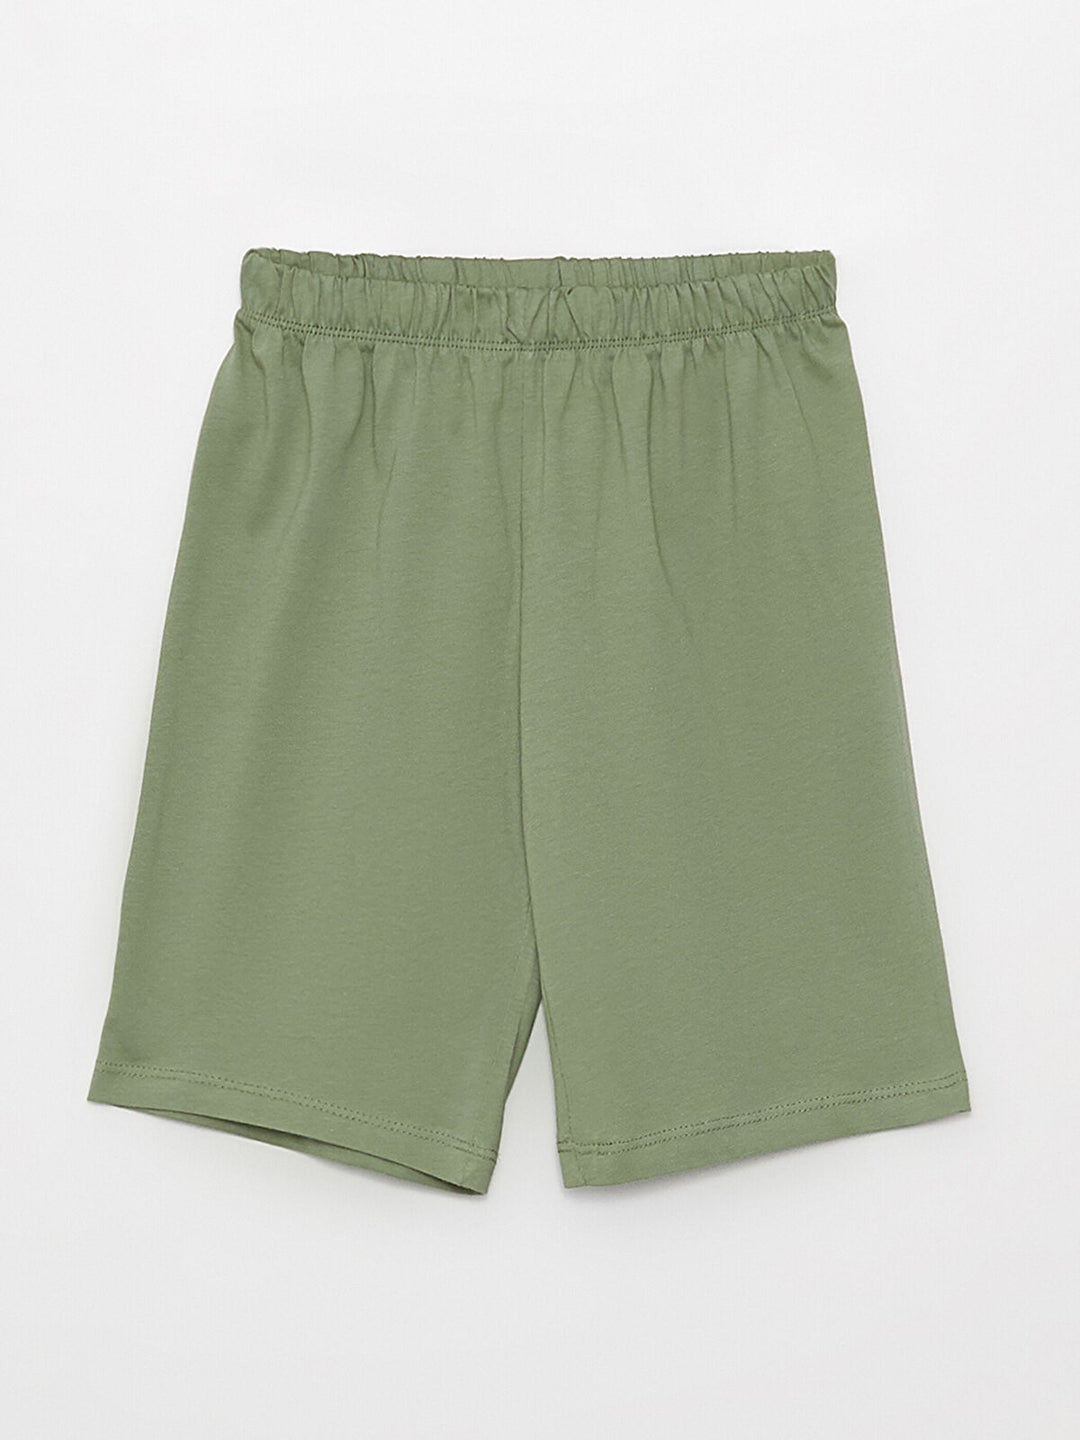 Green Crew Neck Printed Short Sleeve Boys Short Pajamas Set